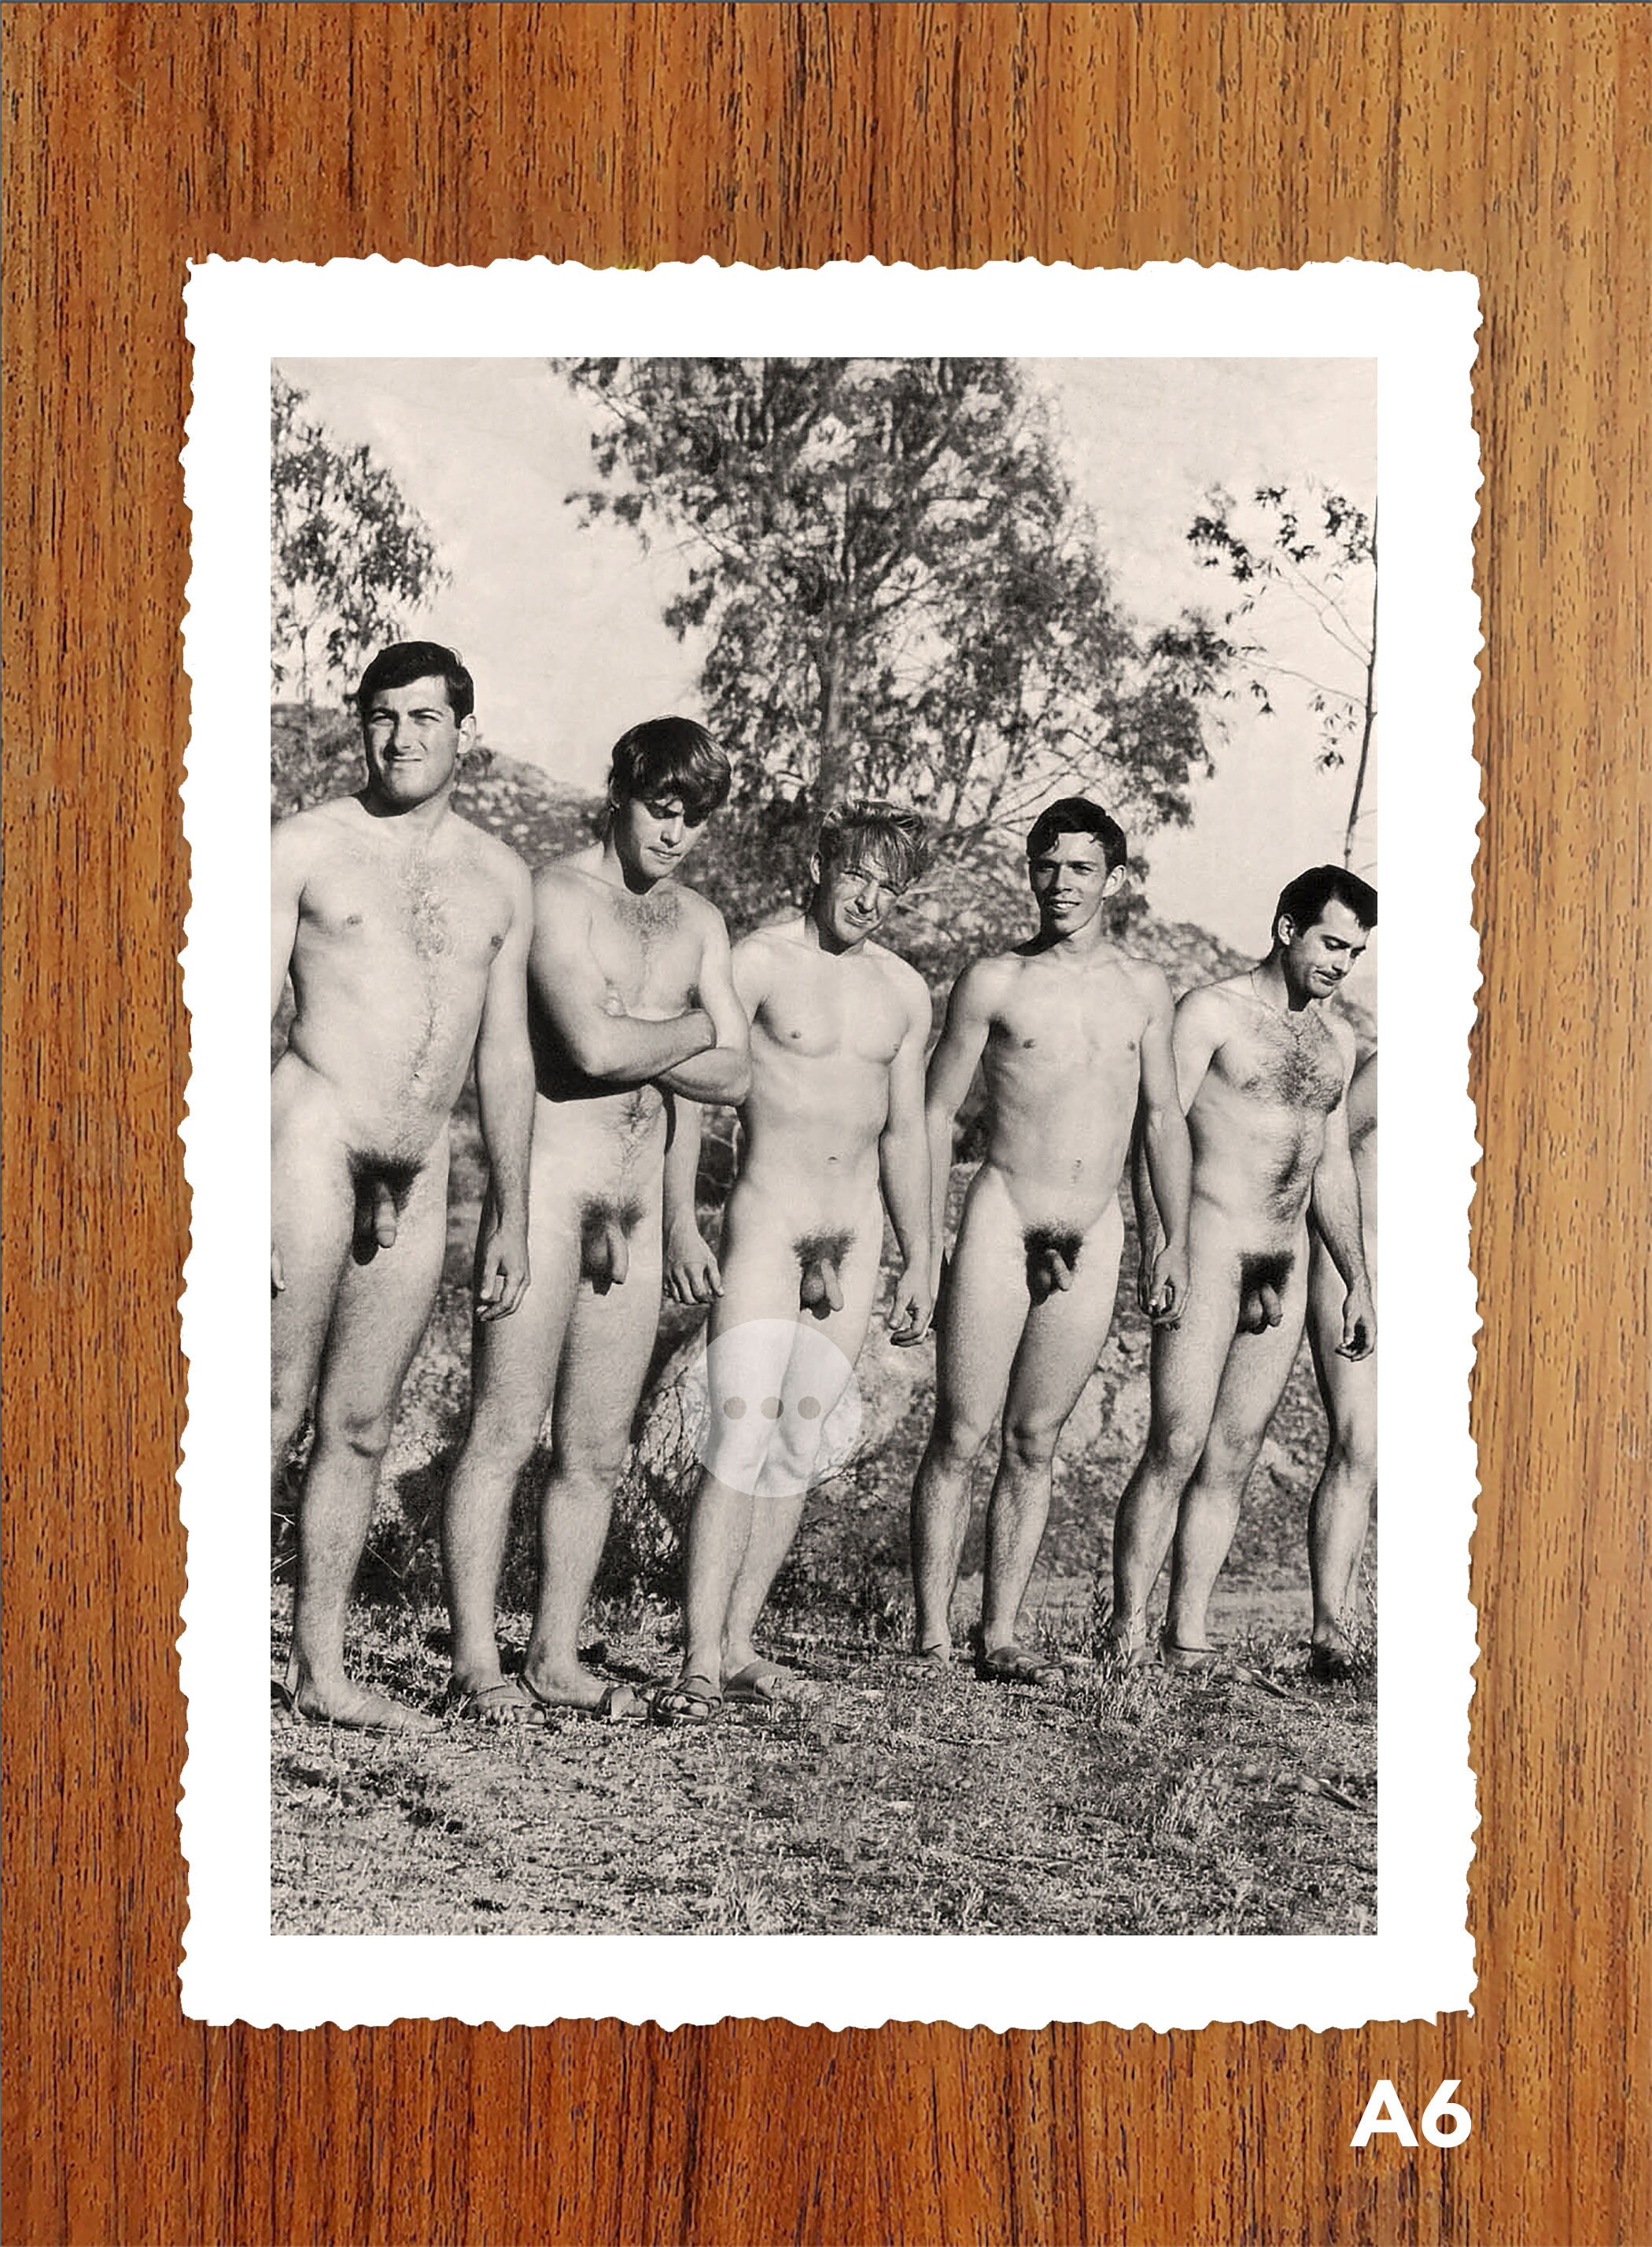 Vintage male nude photos